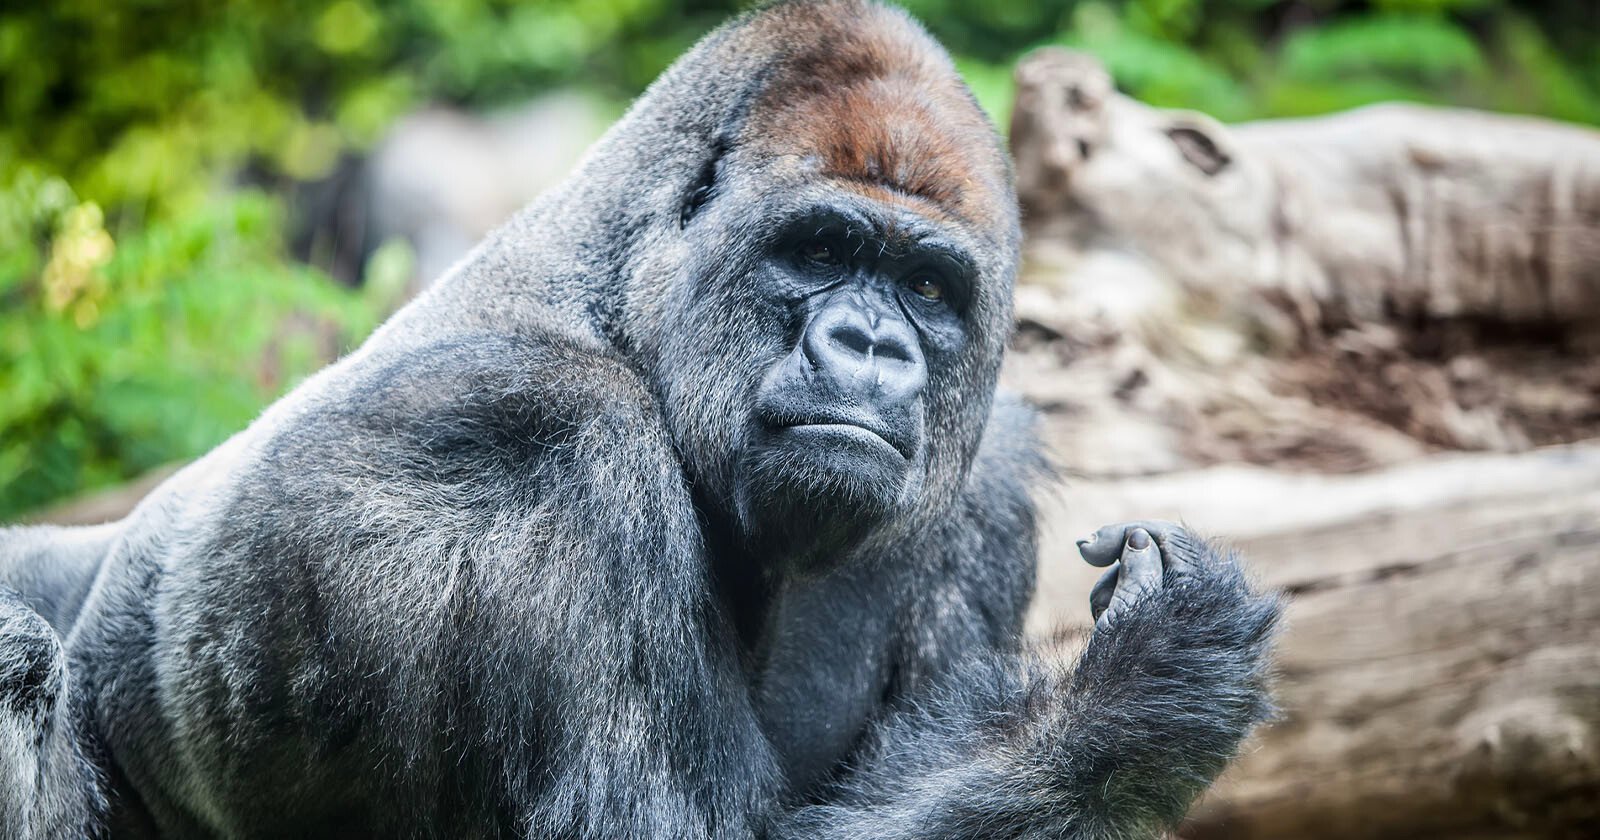  google photos app still unable find gorillas 